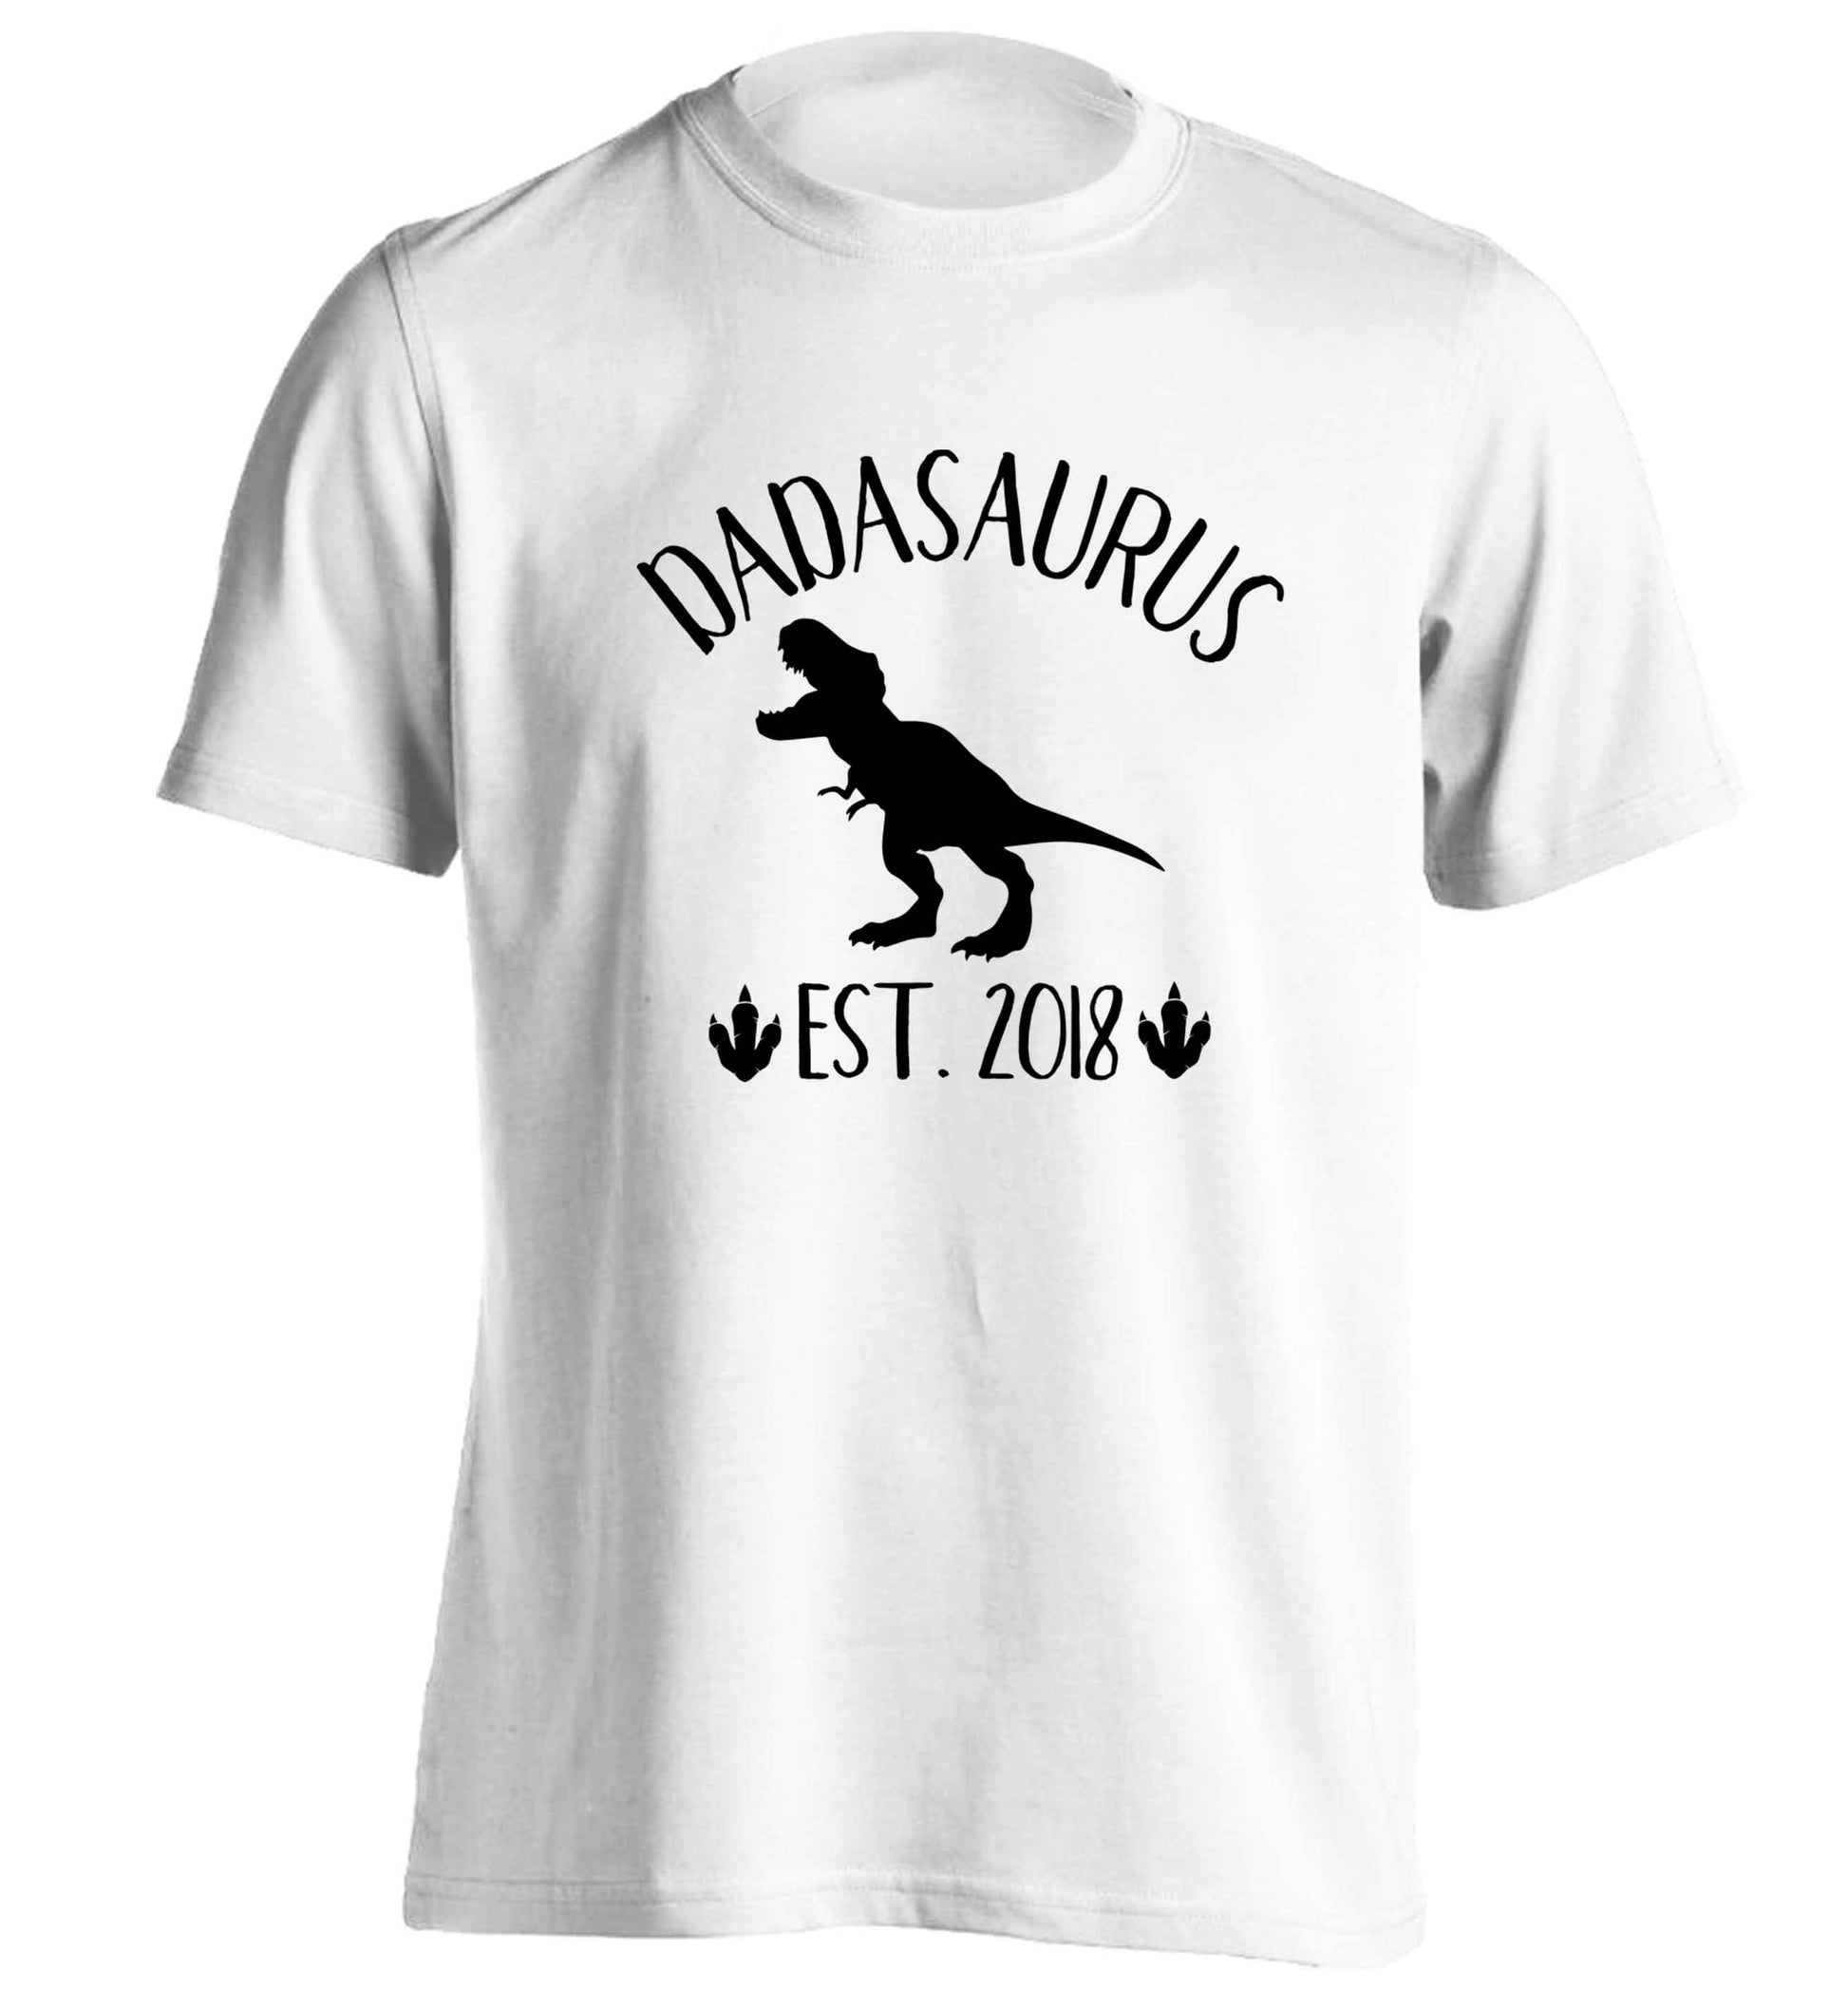 Personalised dadasaurus since (custom date) adults unisex white Tshirt 2XL